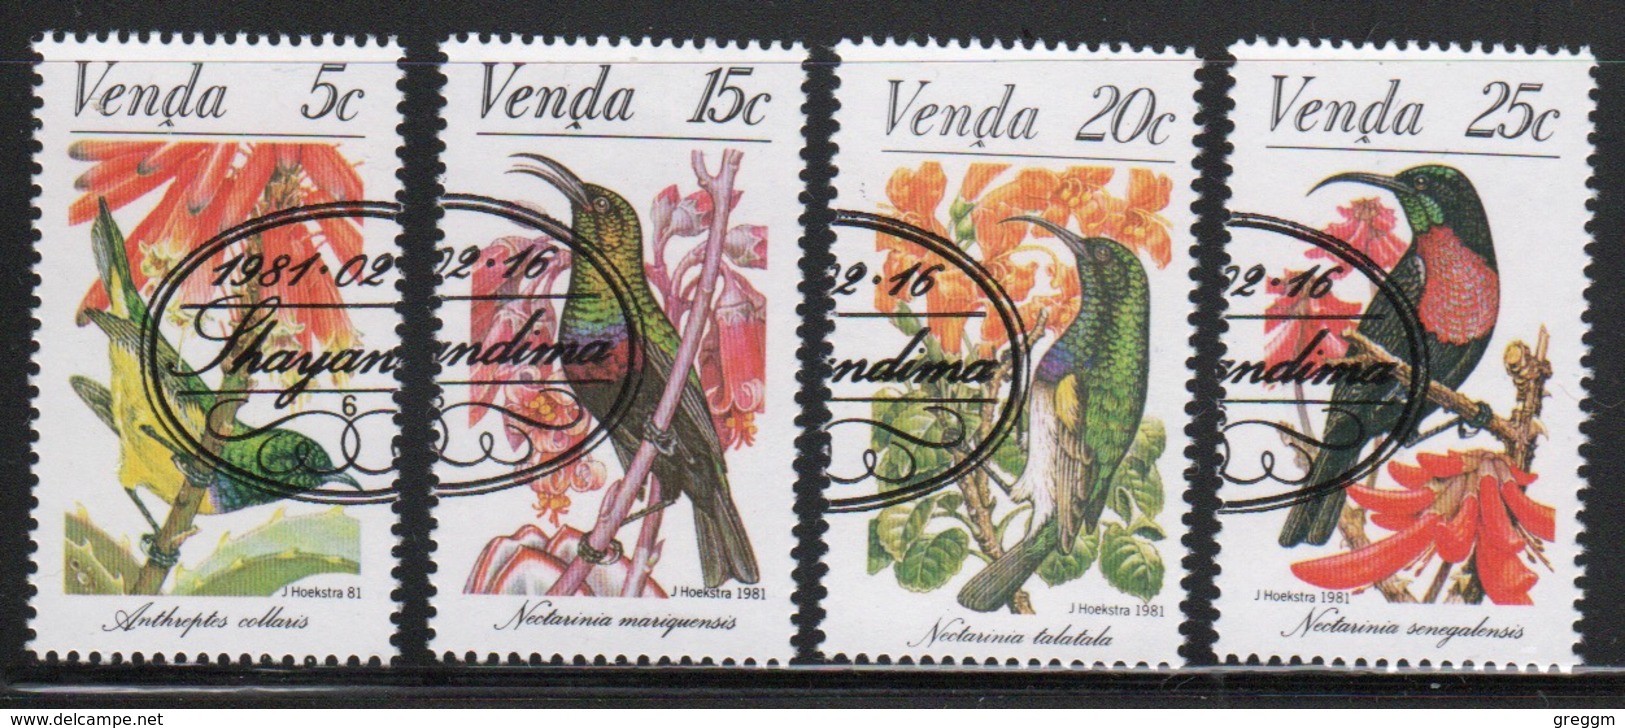 Venda 1981 Complete Set Of Stamps Celebrating Sunbirds. - Venda